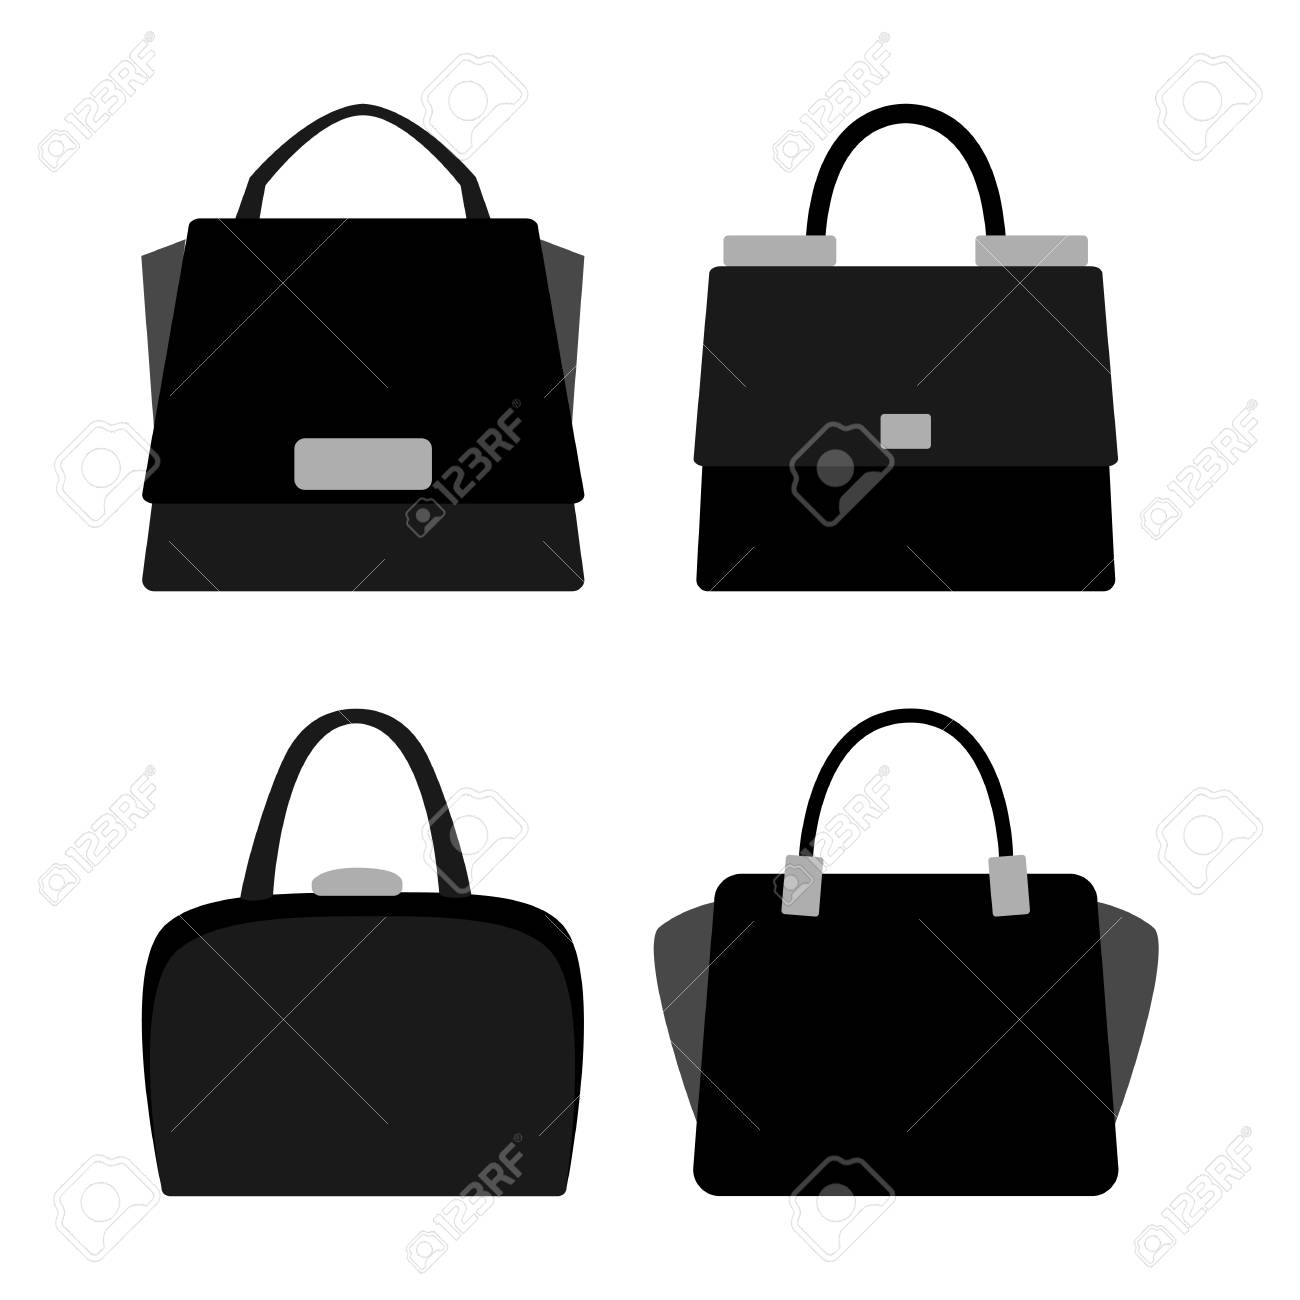 Women Bag Clipart monochrome - Women Bag Clipart